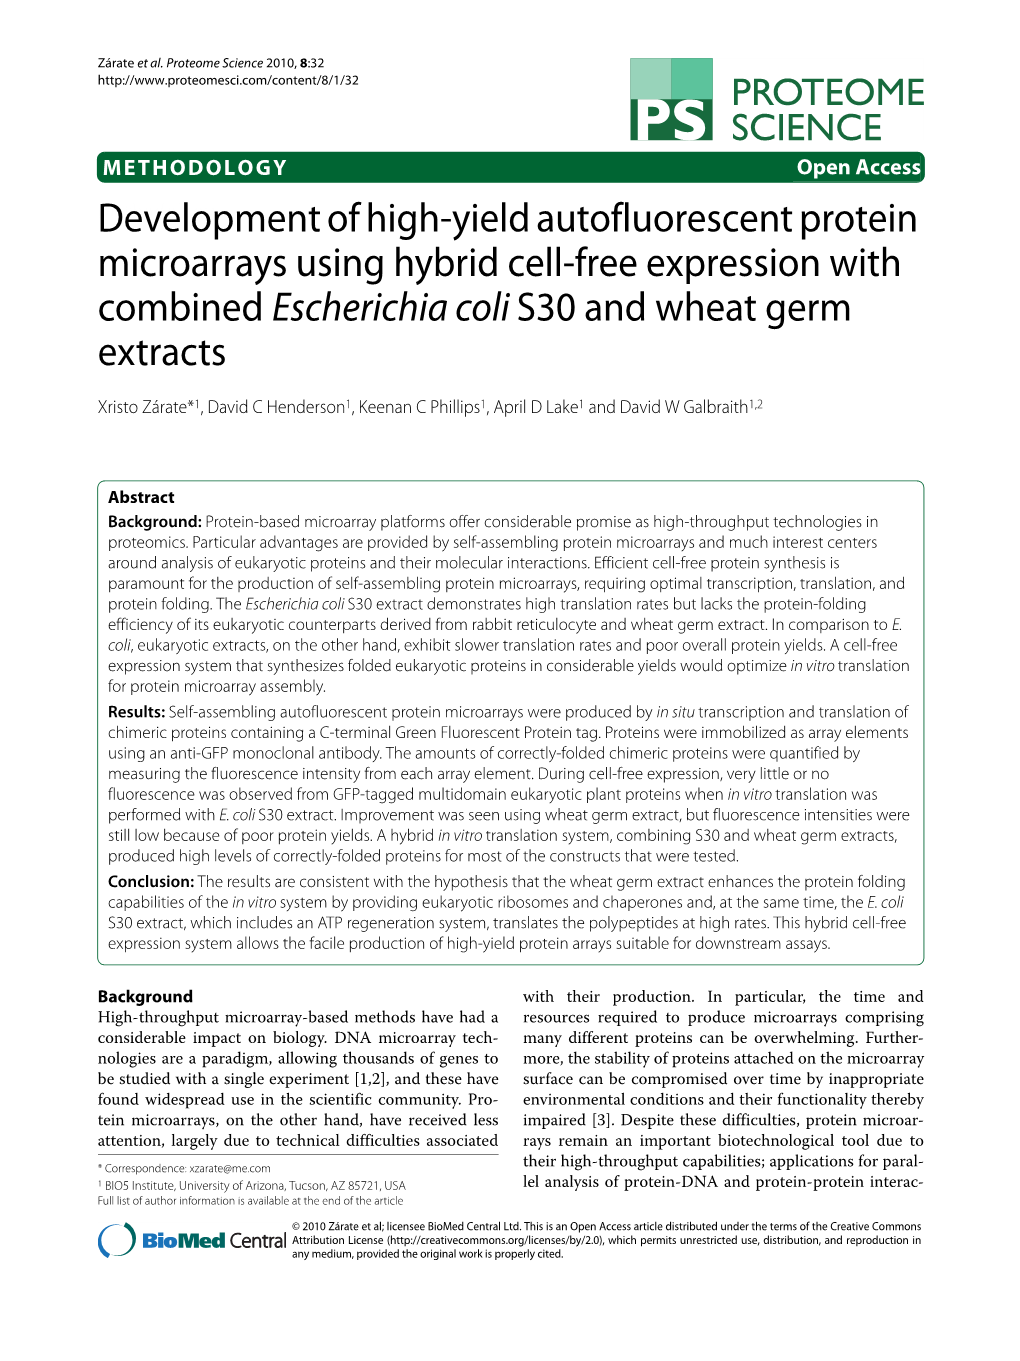 Development of High-Yield Autofluorescent Protein Microarrays